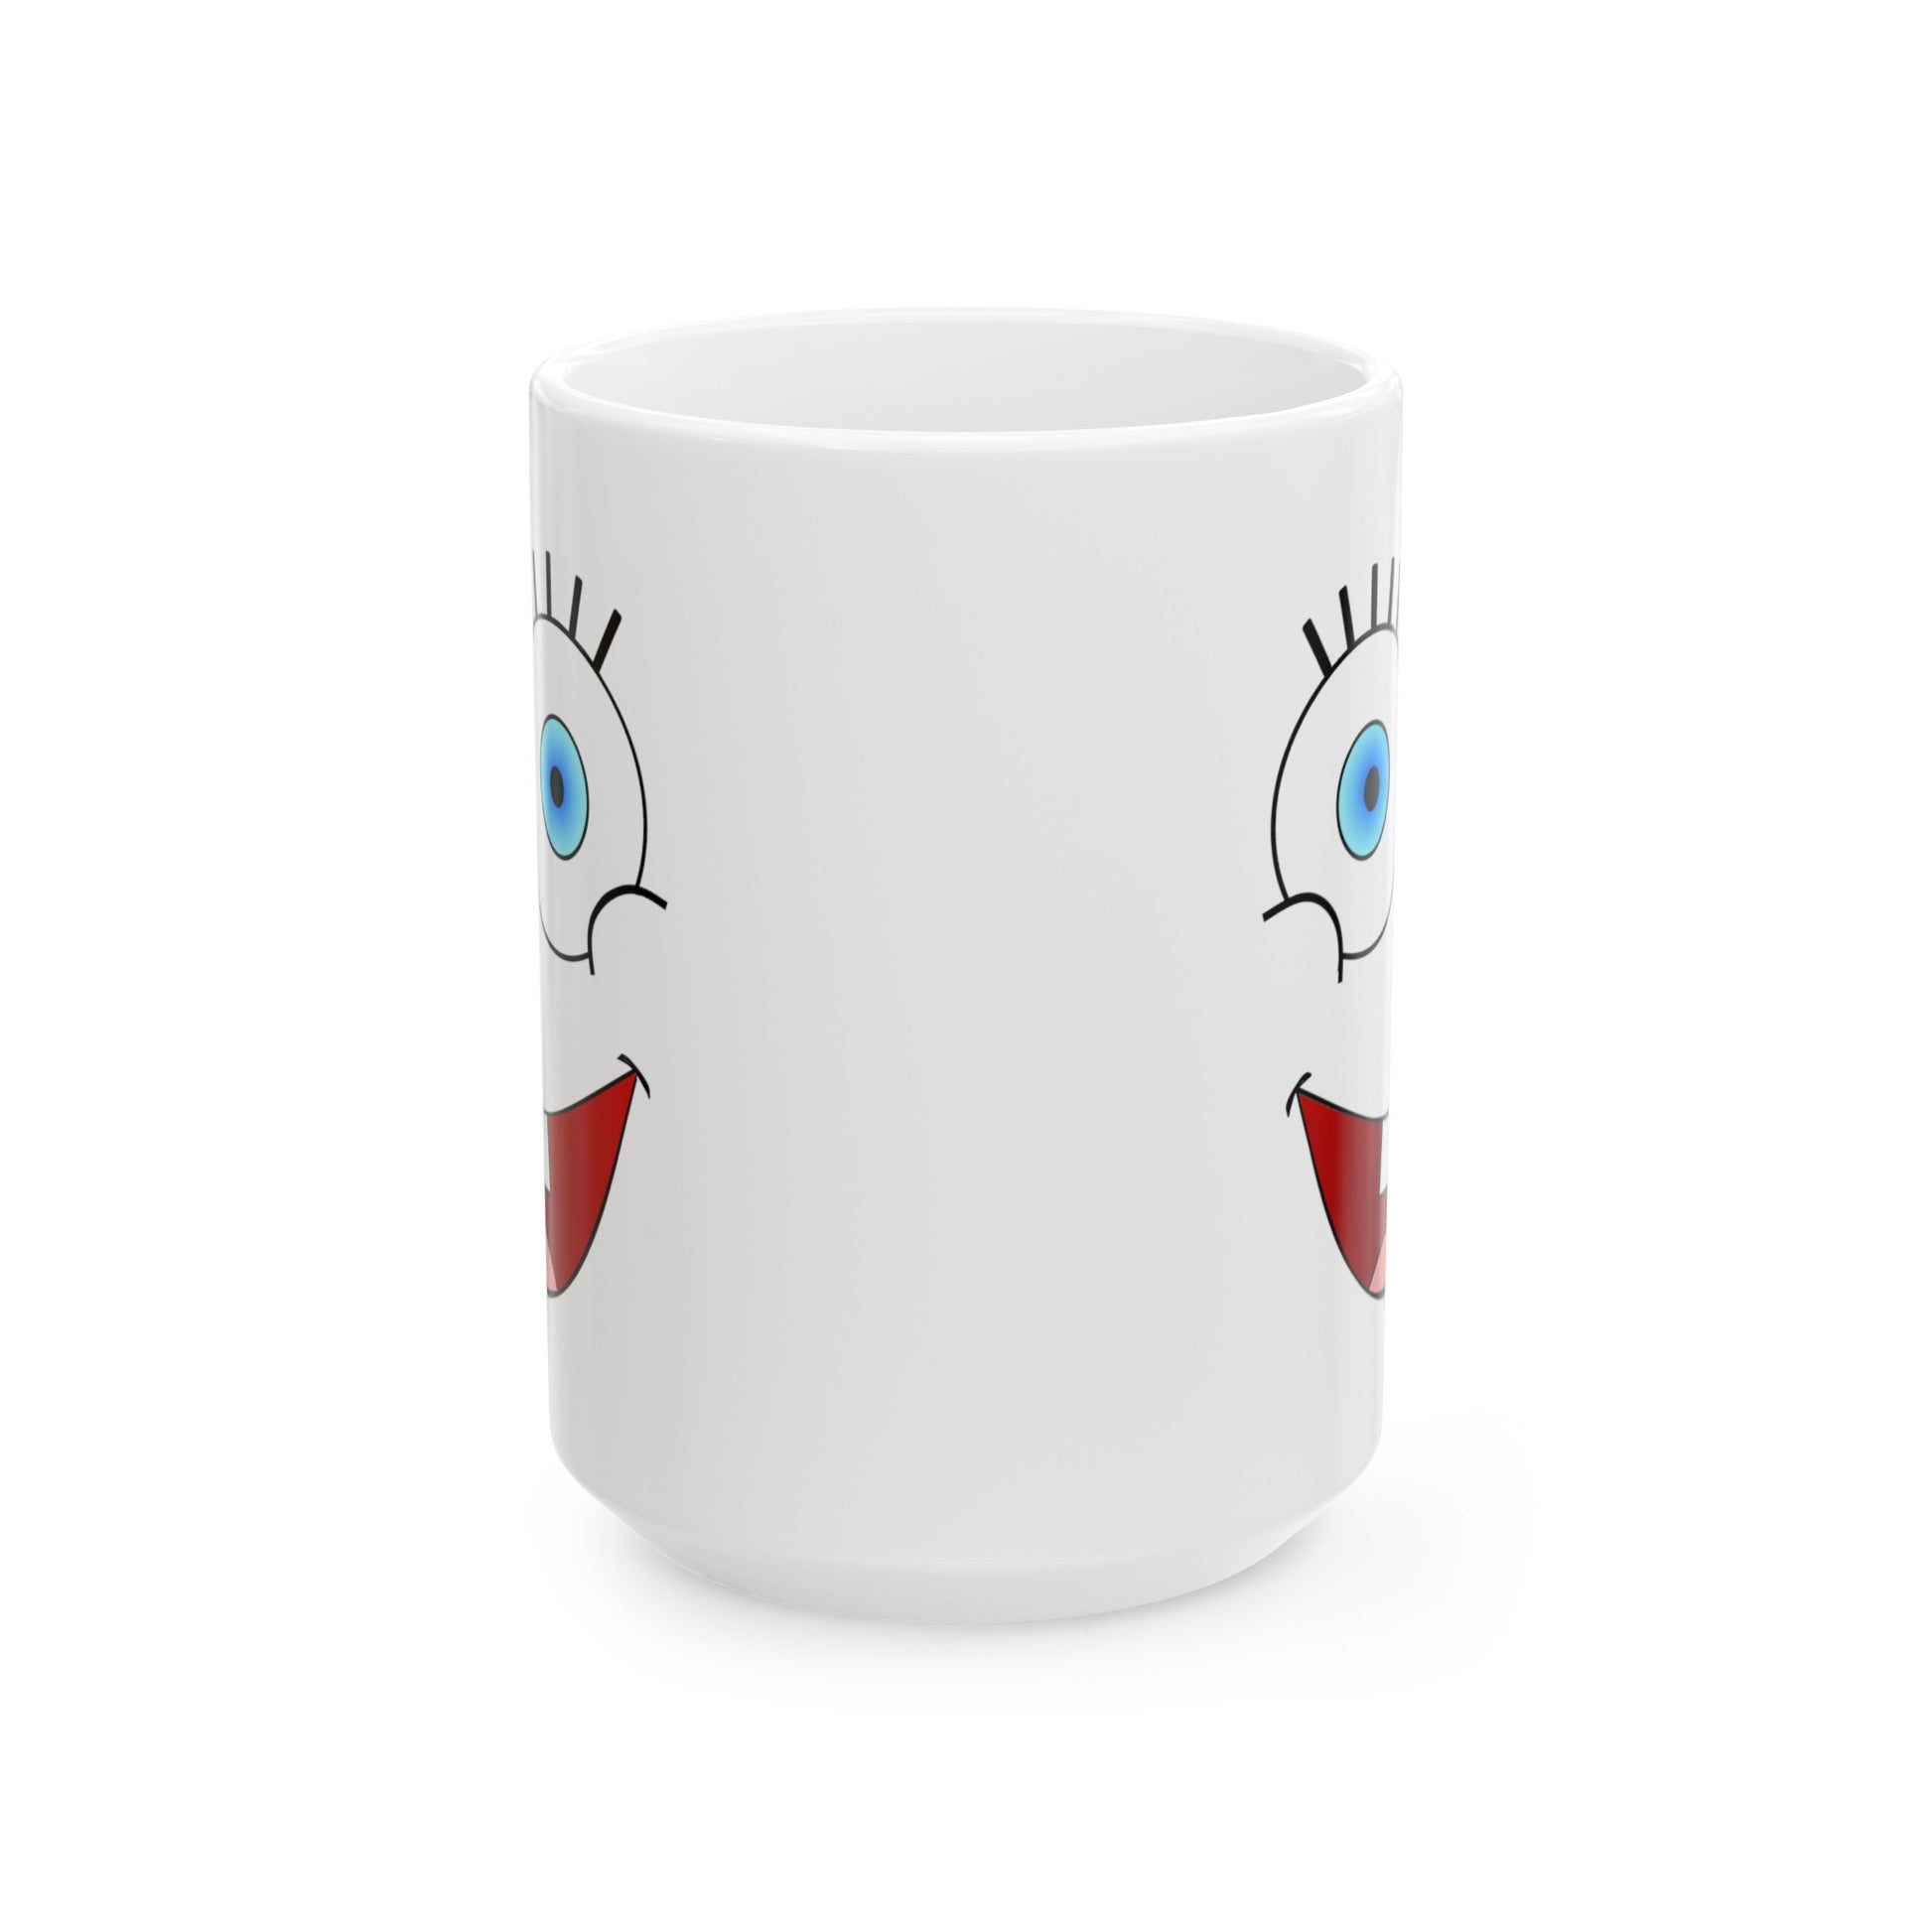 SpongeBobish Coffee Mug - Double Sided White Ceramic 15oz by TheGlassyLass.com